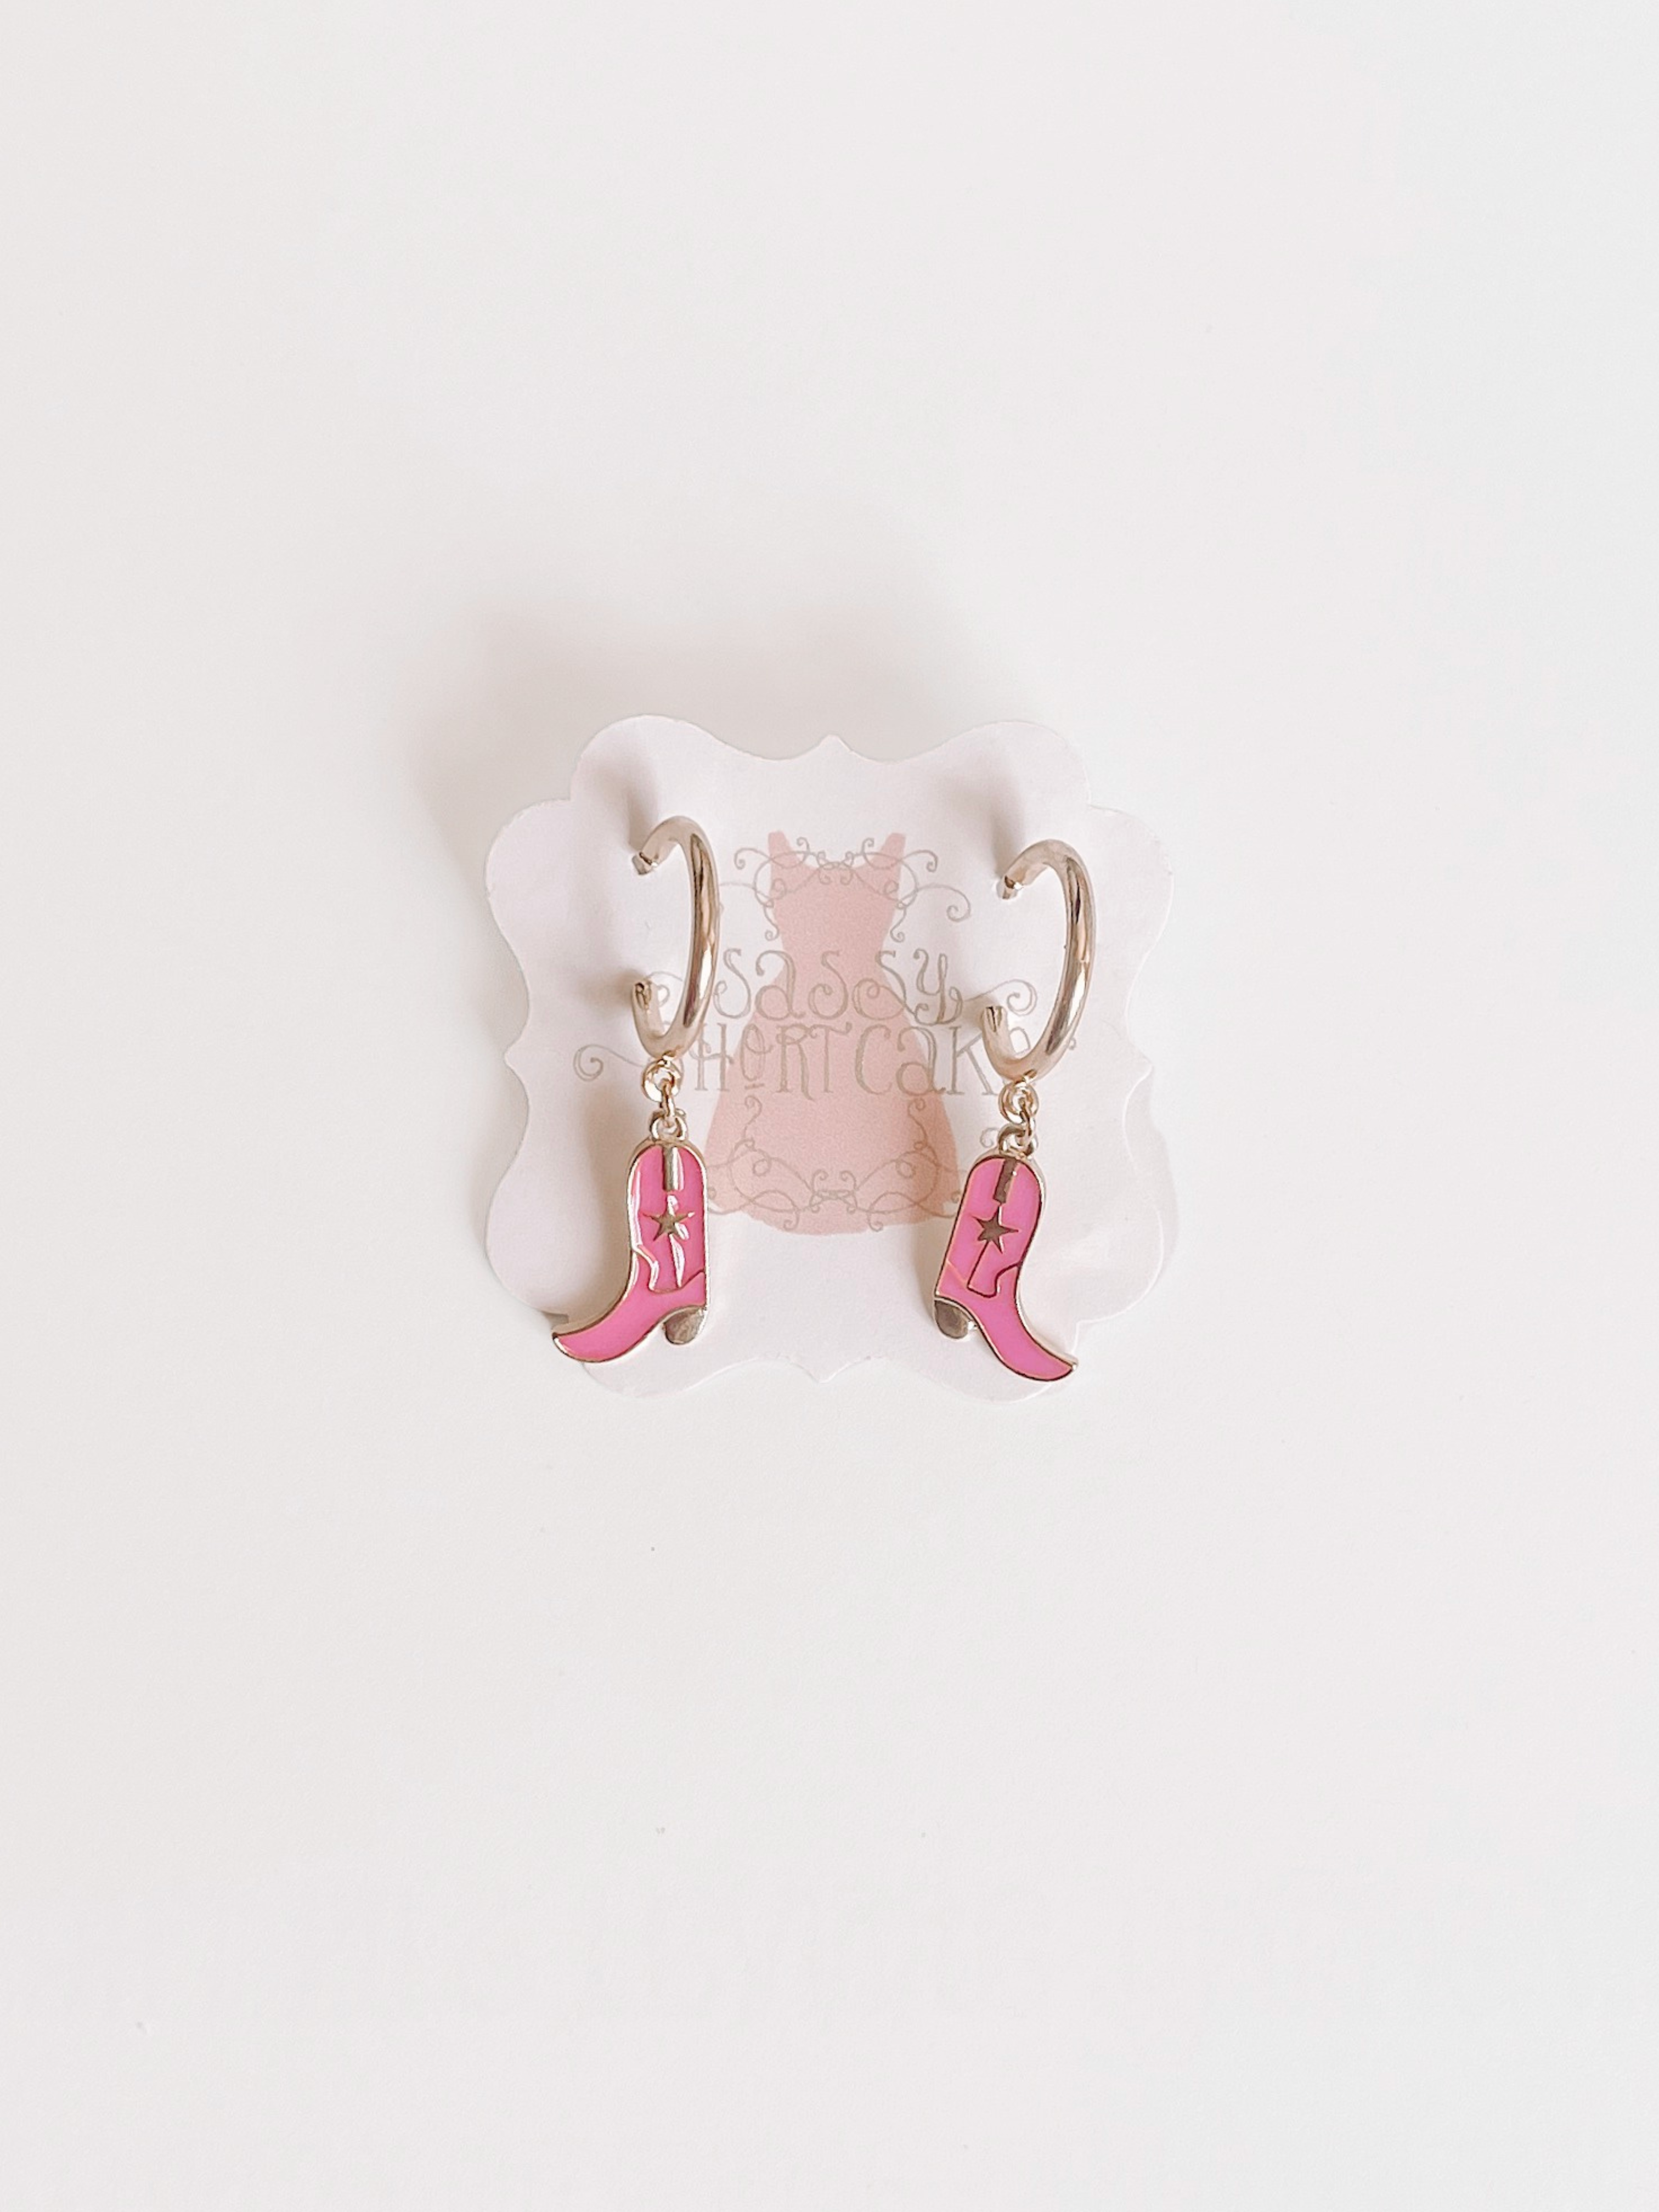 Hot Pink Rodeo Boot Earrings | sassyshortcake.com | Sassy Shortcake